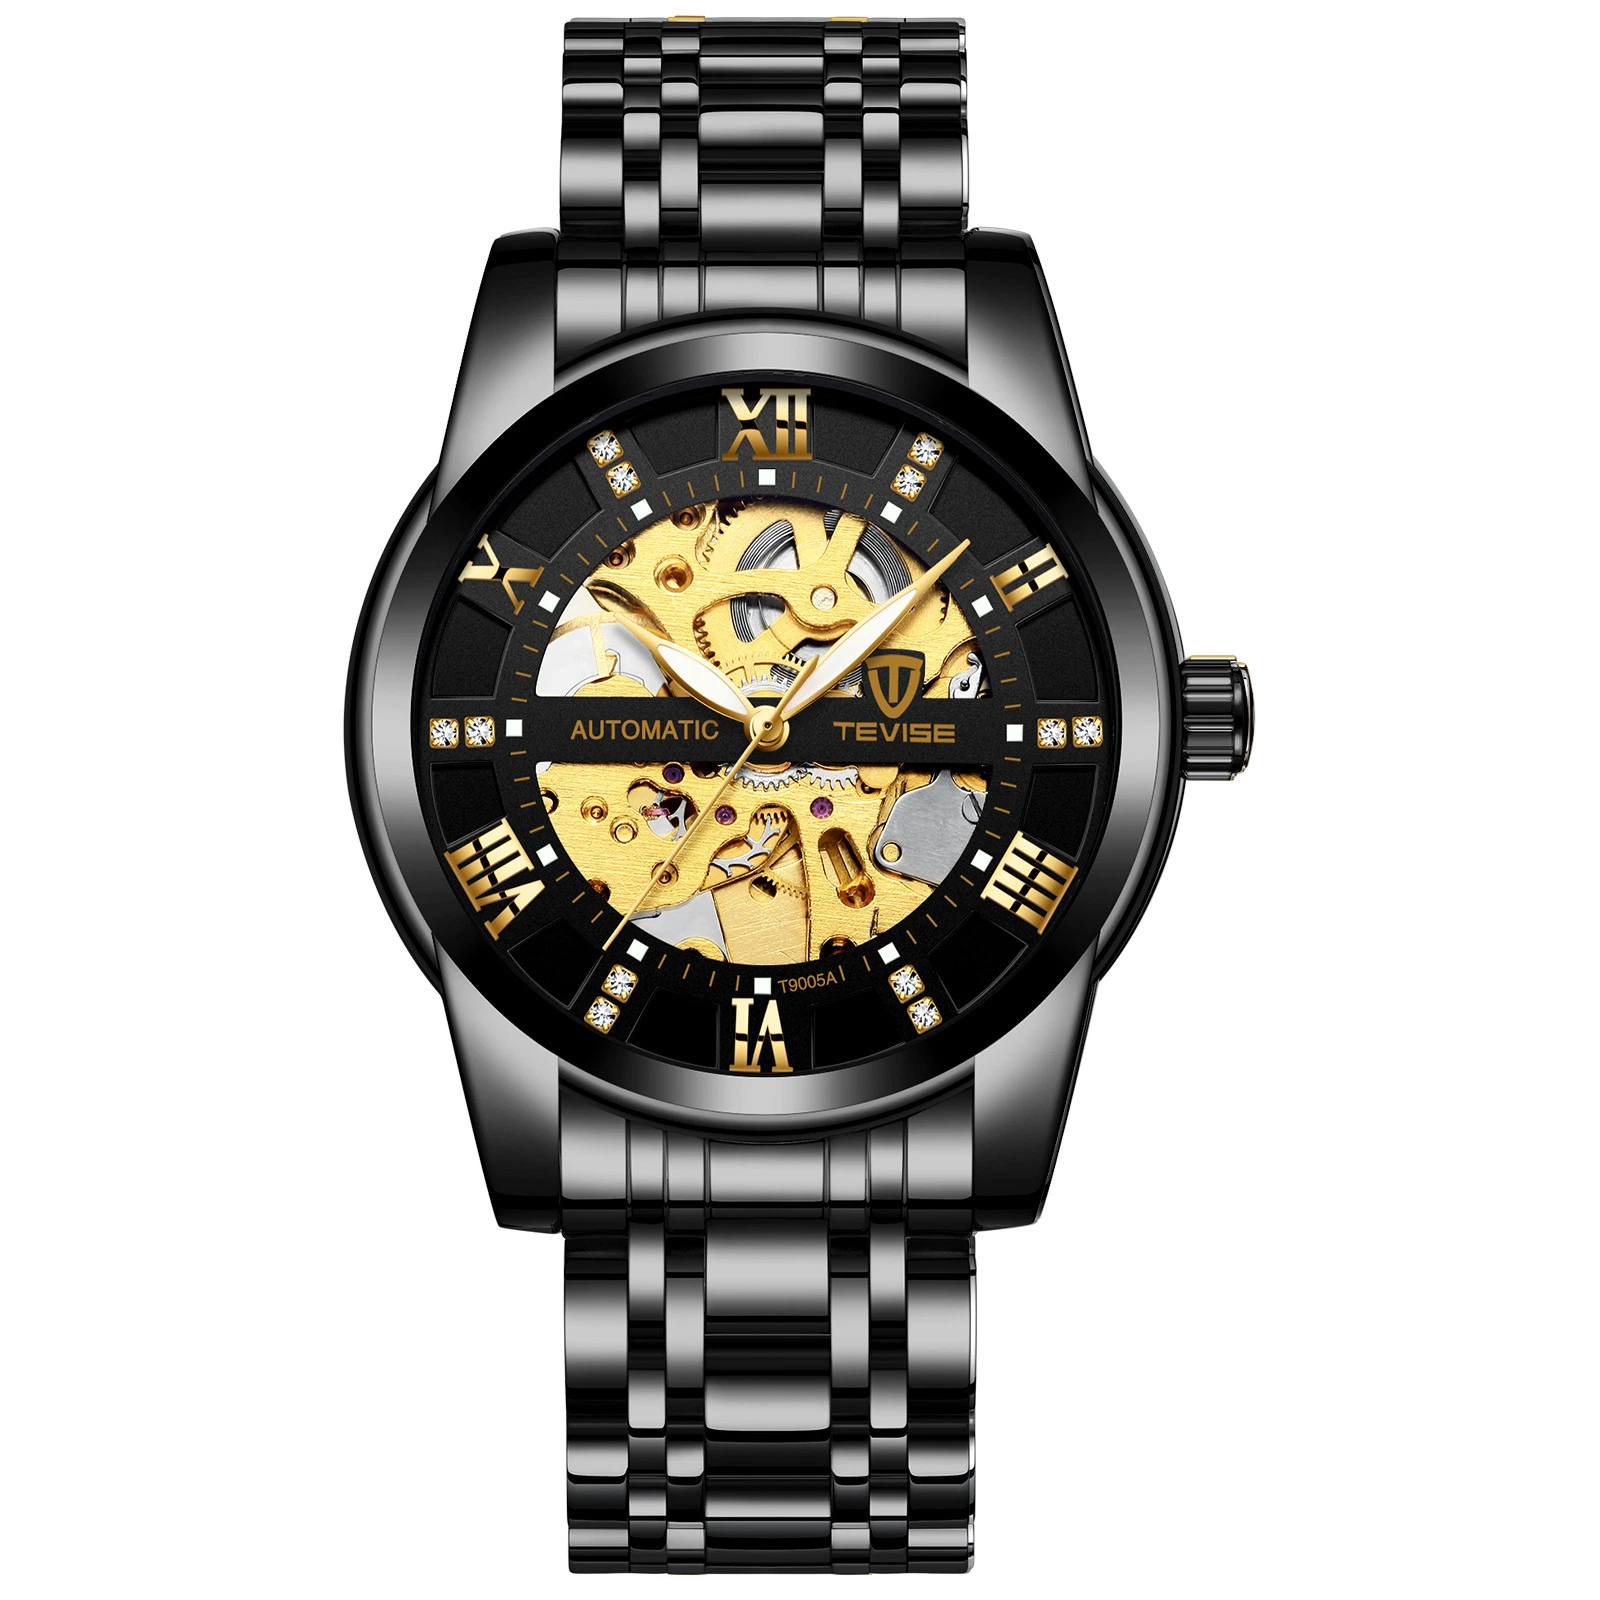 Fashion Swiss Watch Stainless Steel Band Swiss Watch Mechanical Watches